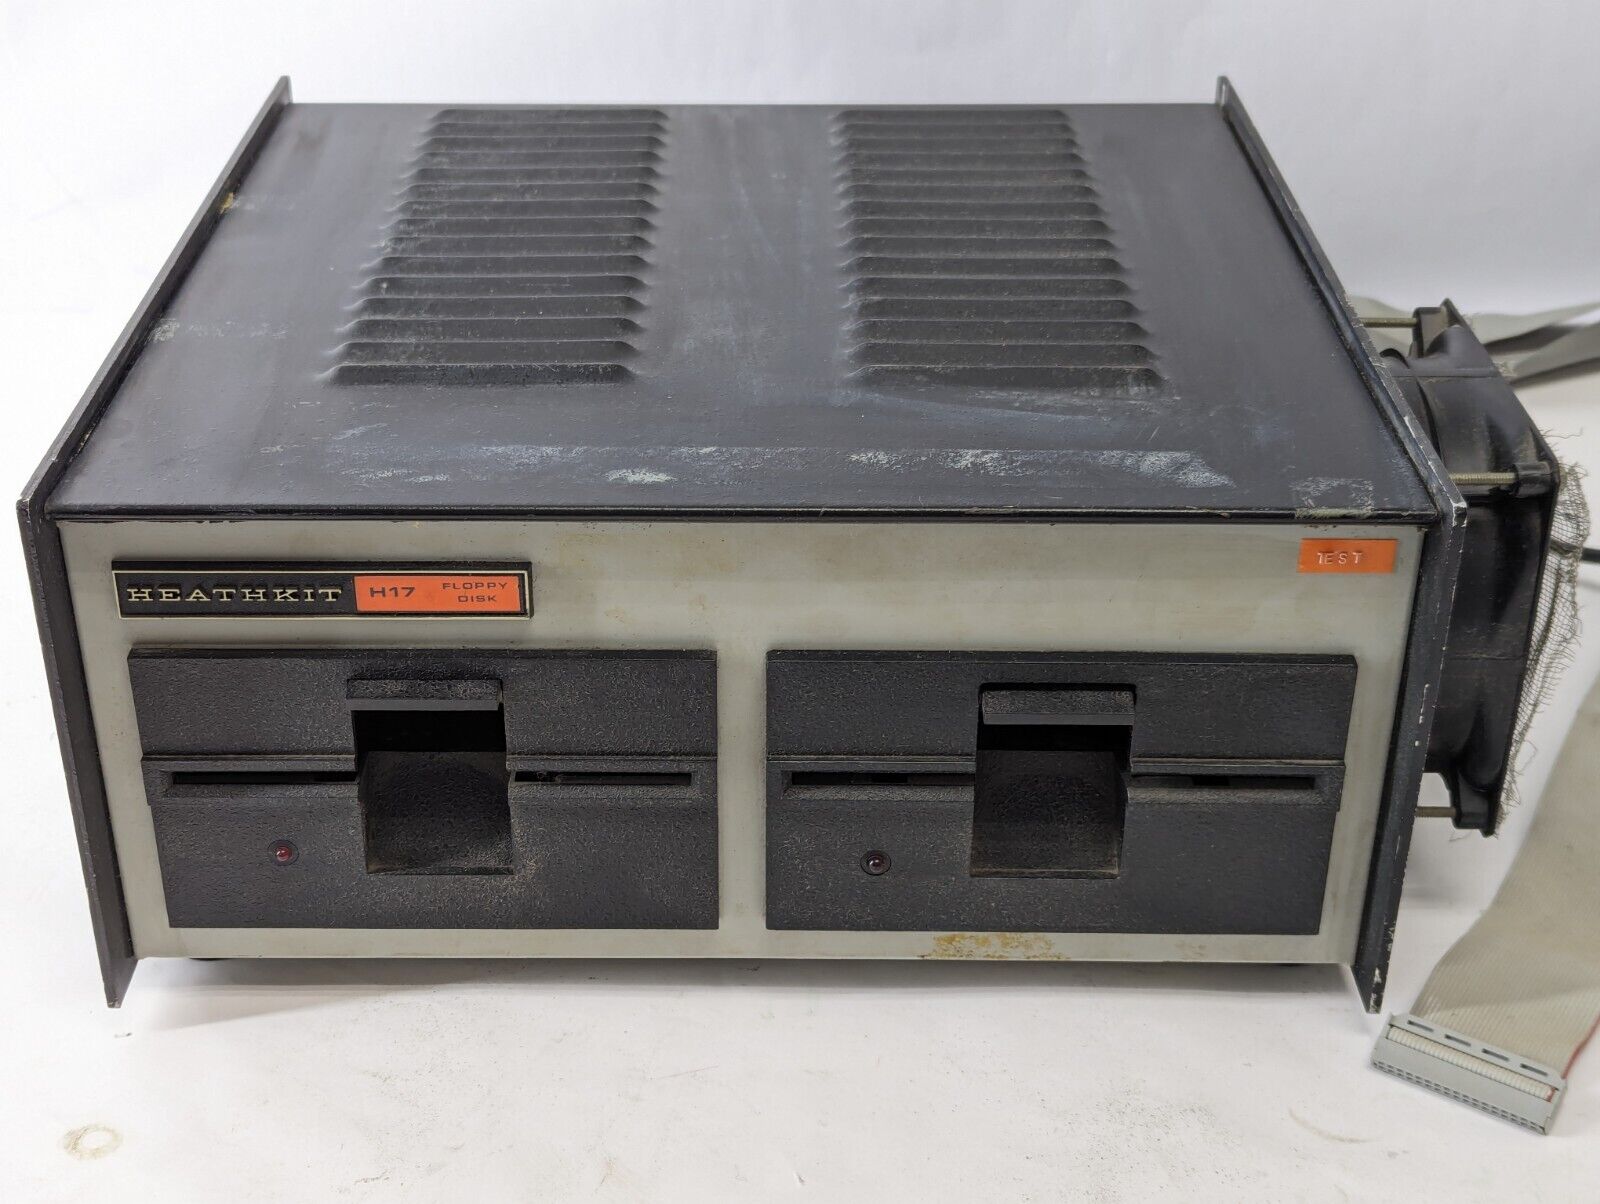 Vintage Heathkit H17 Dual Floppy Disk System, Floppy Disk Drive